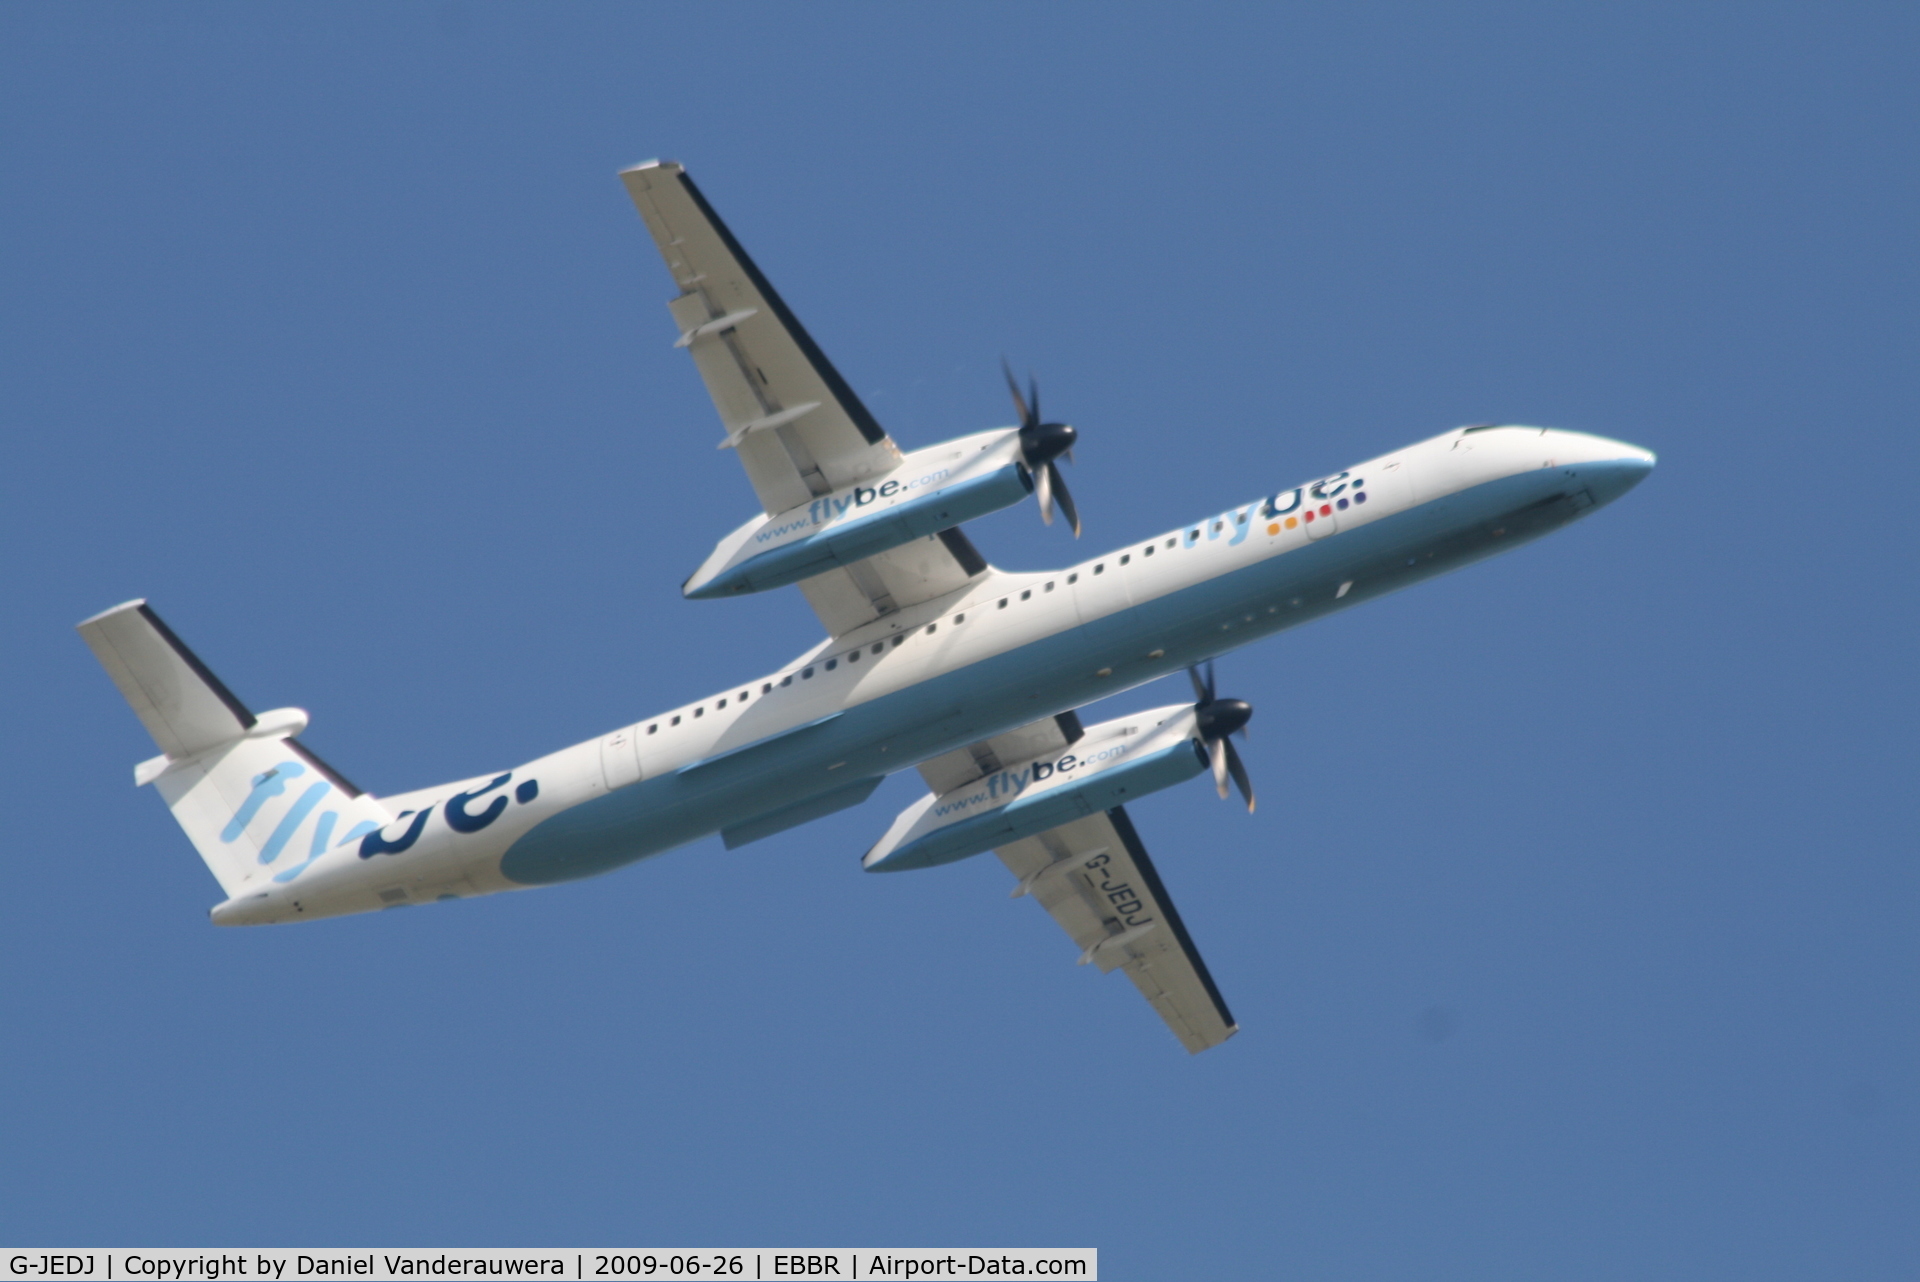 G-JEDJ, 2002 De Havilland Canada DHC-8-402Q Dash 8 C/N 4058, Flight BE7182 is taking off from rwy 07R